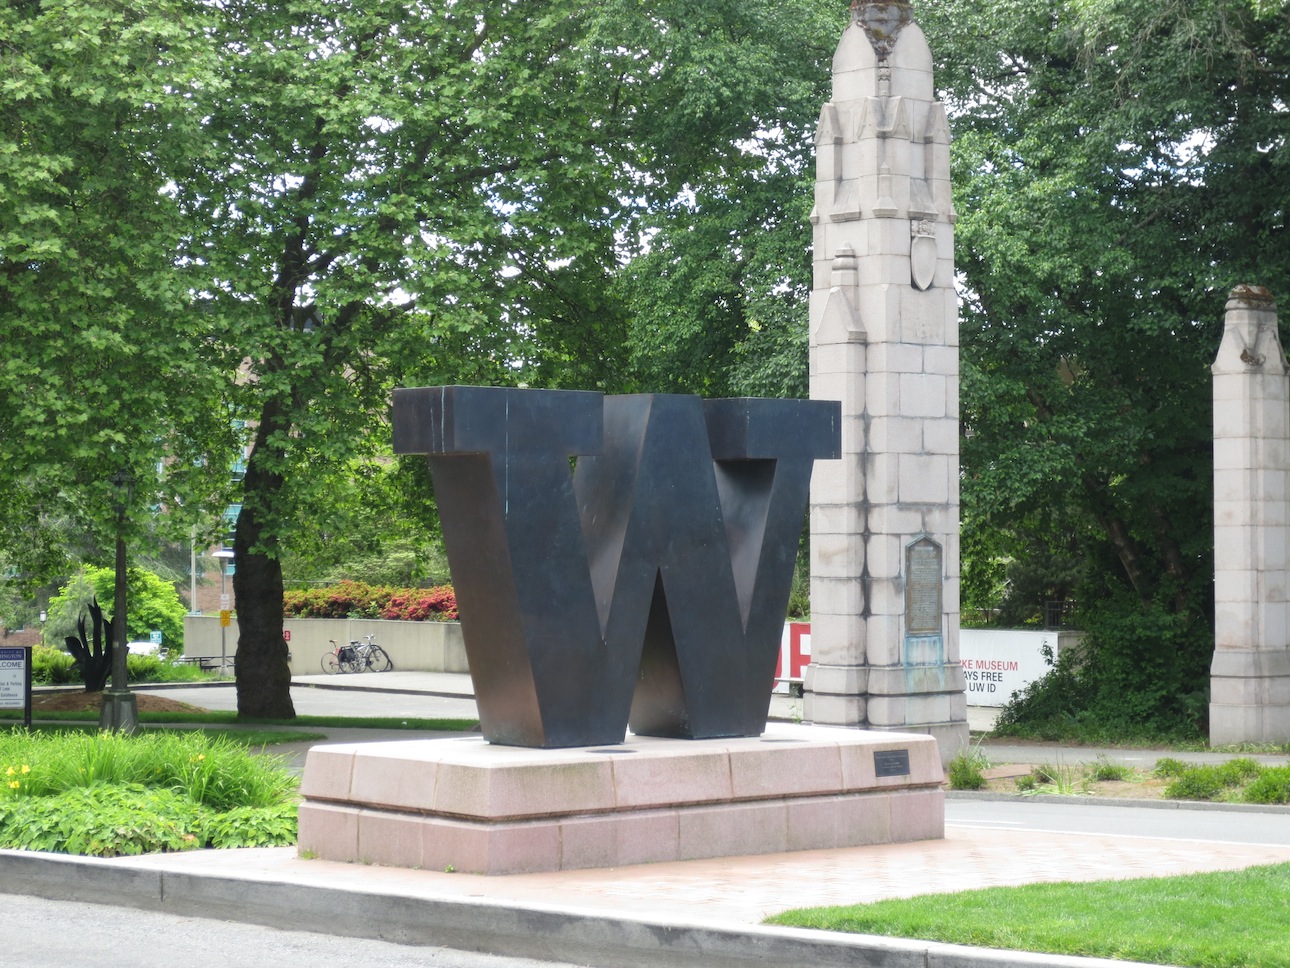 University of Washington logo at the entrance to their campus.